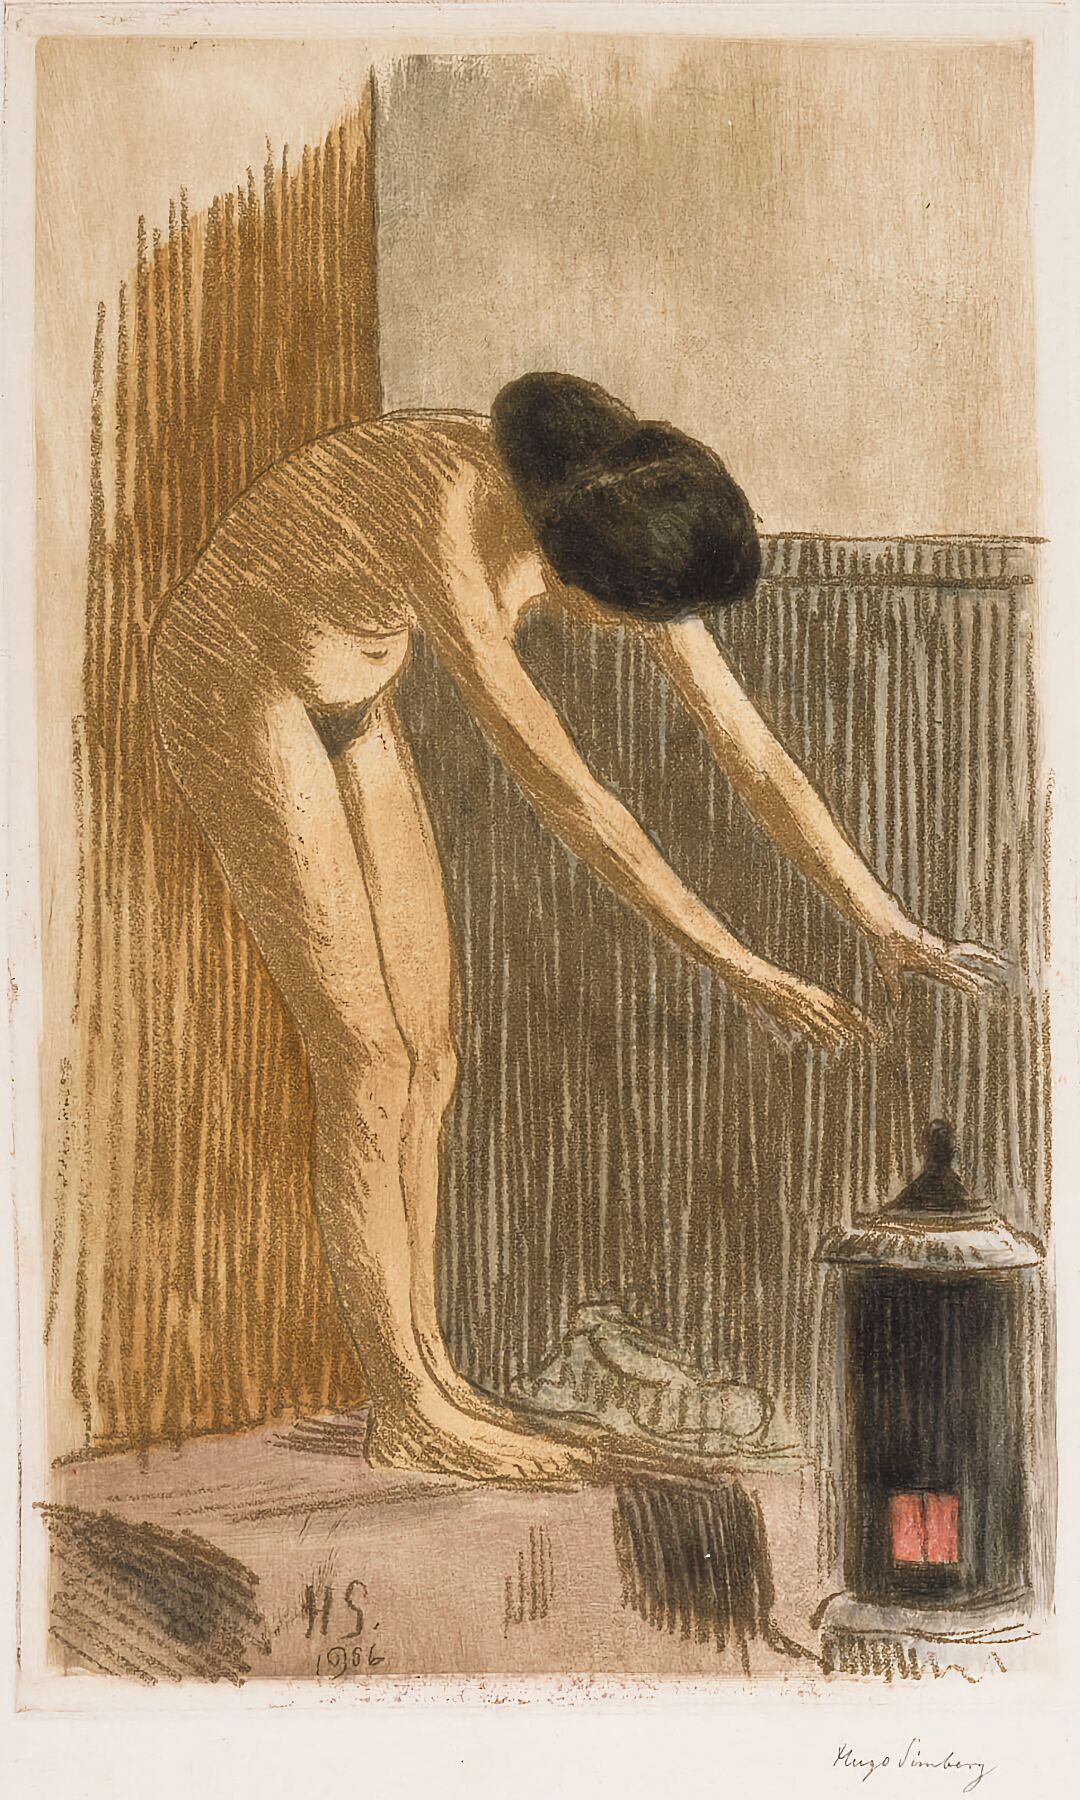 Malli lämmittelee by Hugo Simberg - 1906